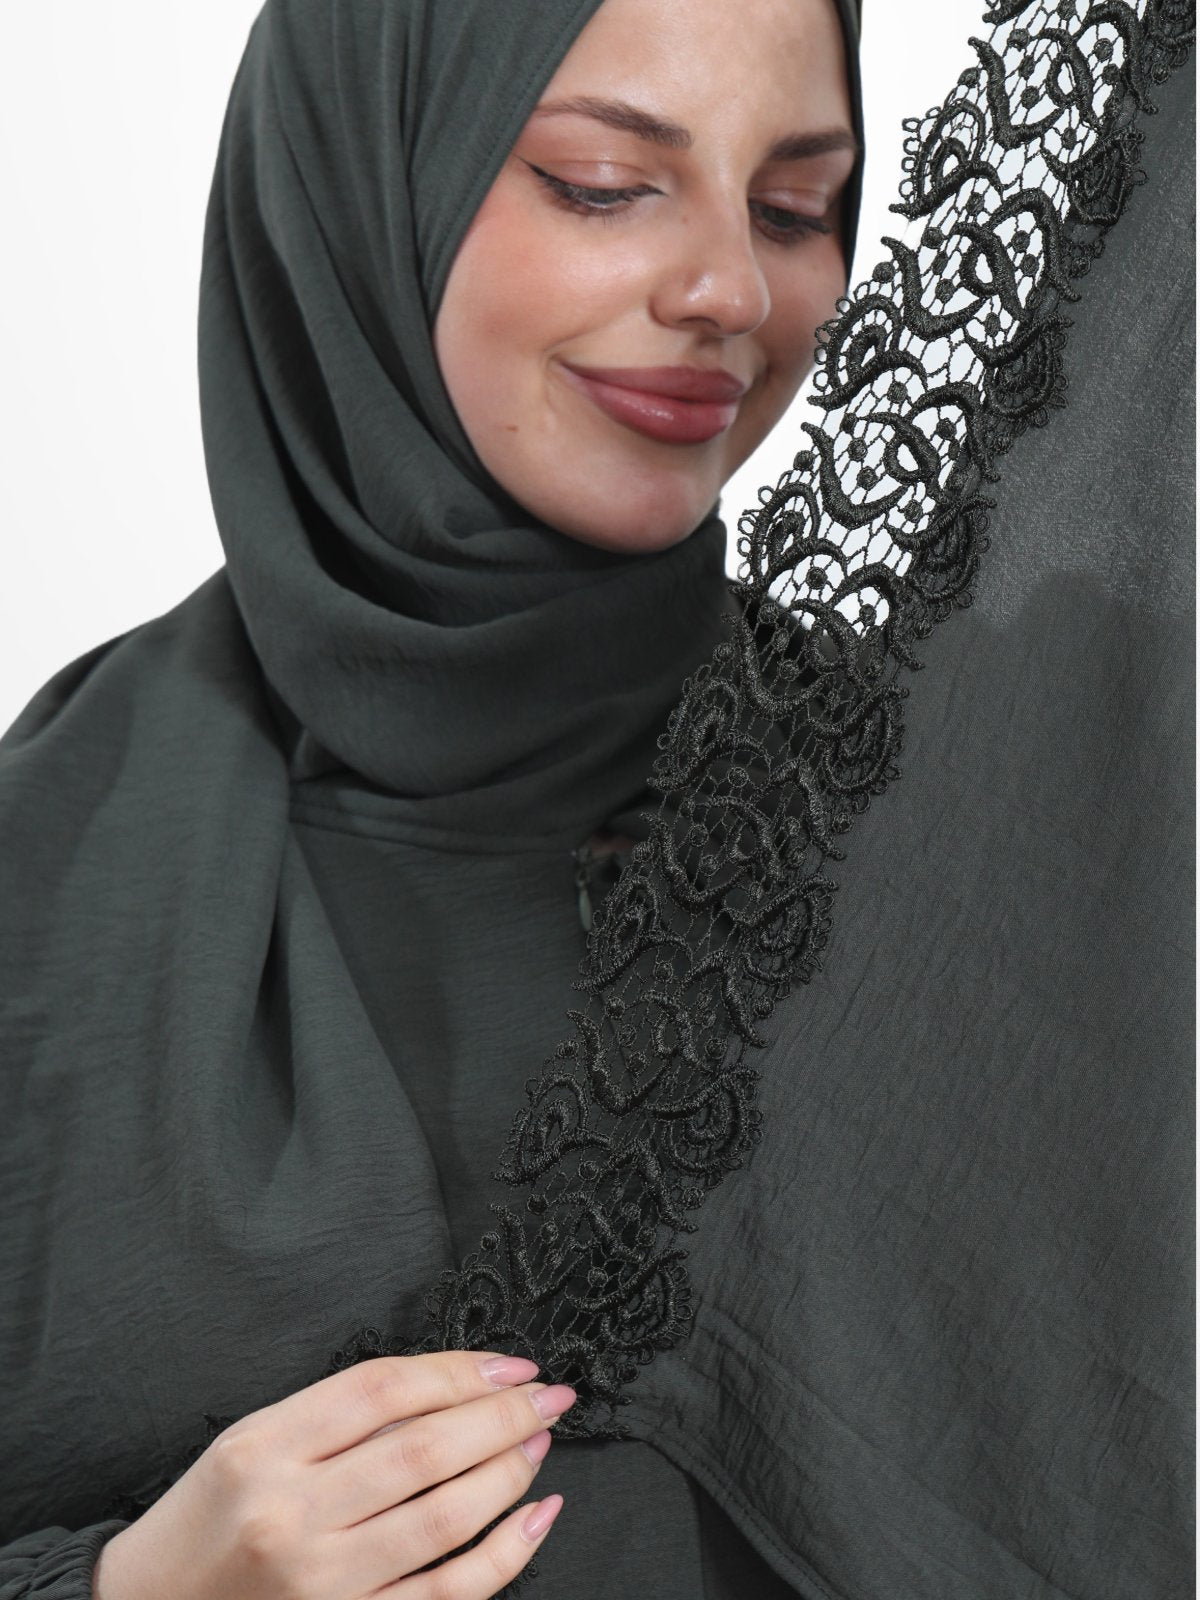 One - Piece Prayer Dress & Abaya with attached Hijab - Plain (Standard Size - Slim Fit) - Modest Essence